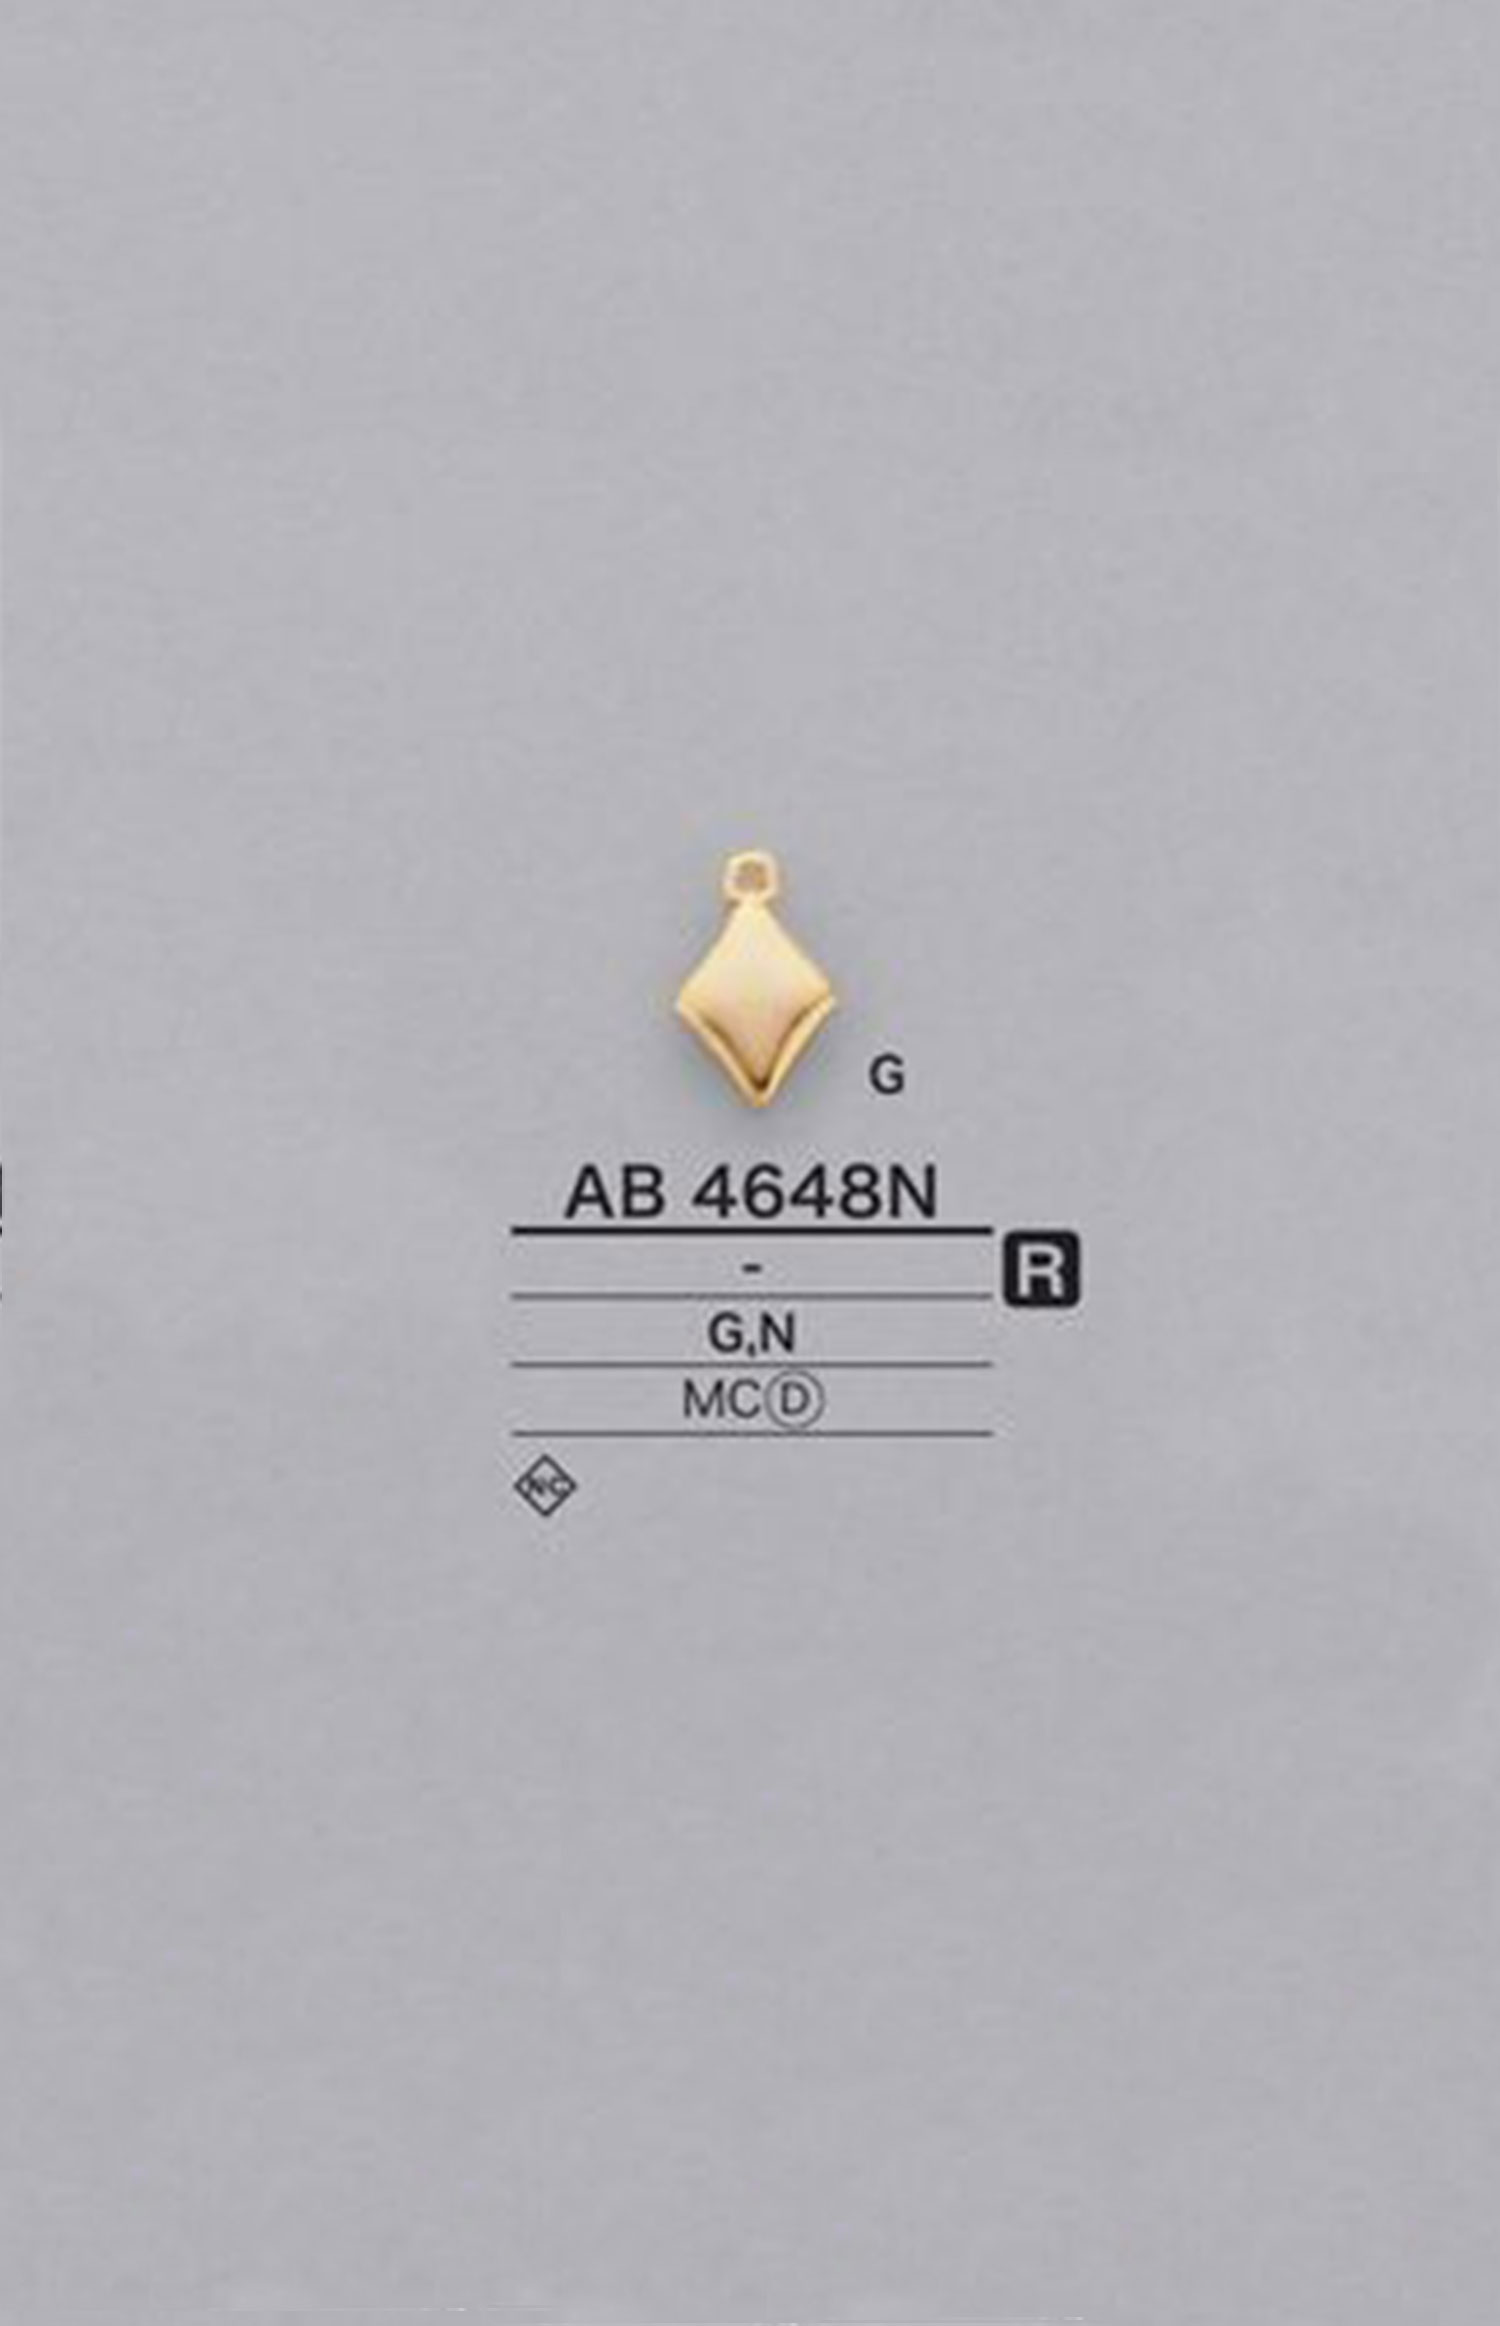 AB4648N 钻石图形元素零件[杂货等] 爱丽丝纽扣